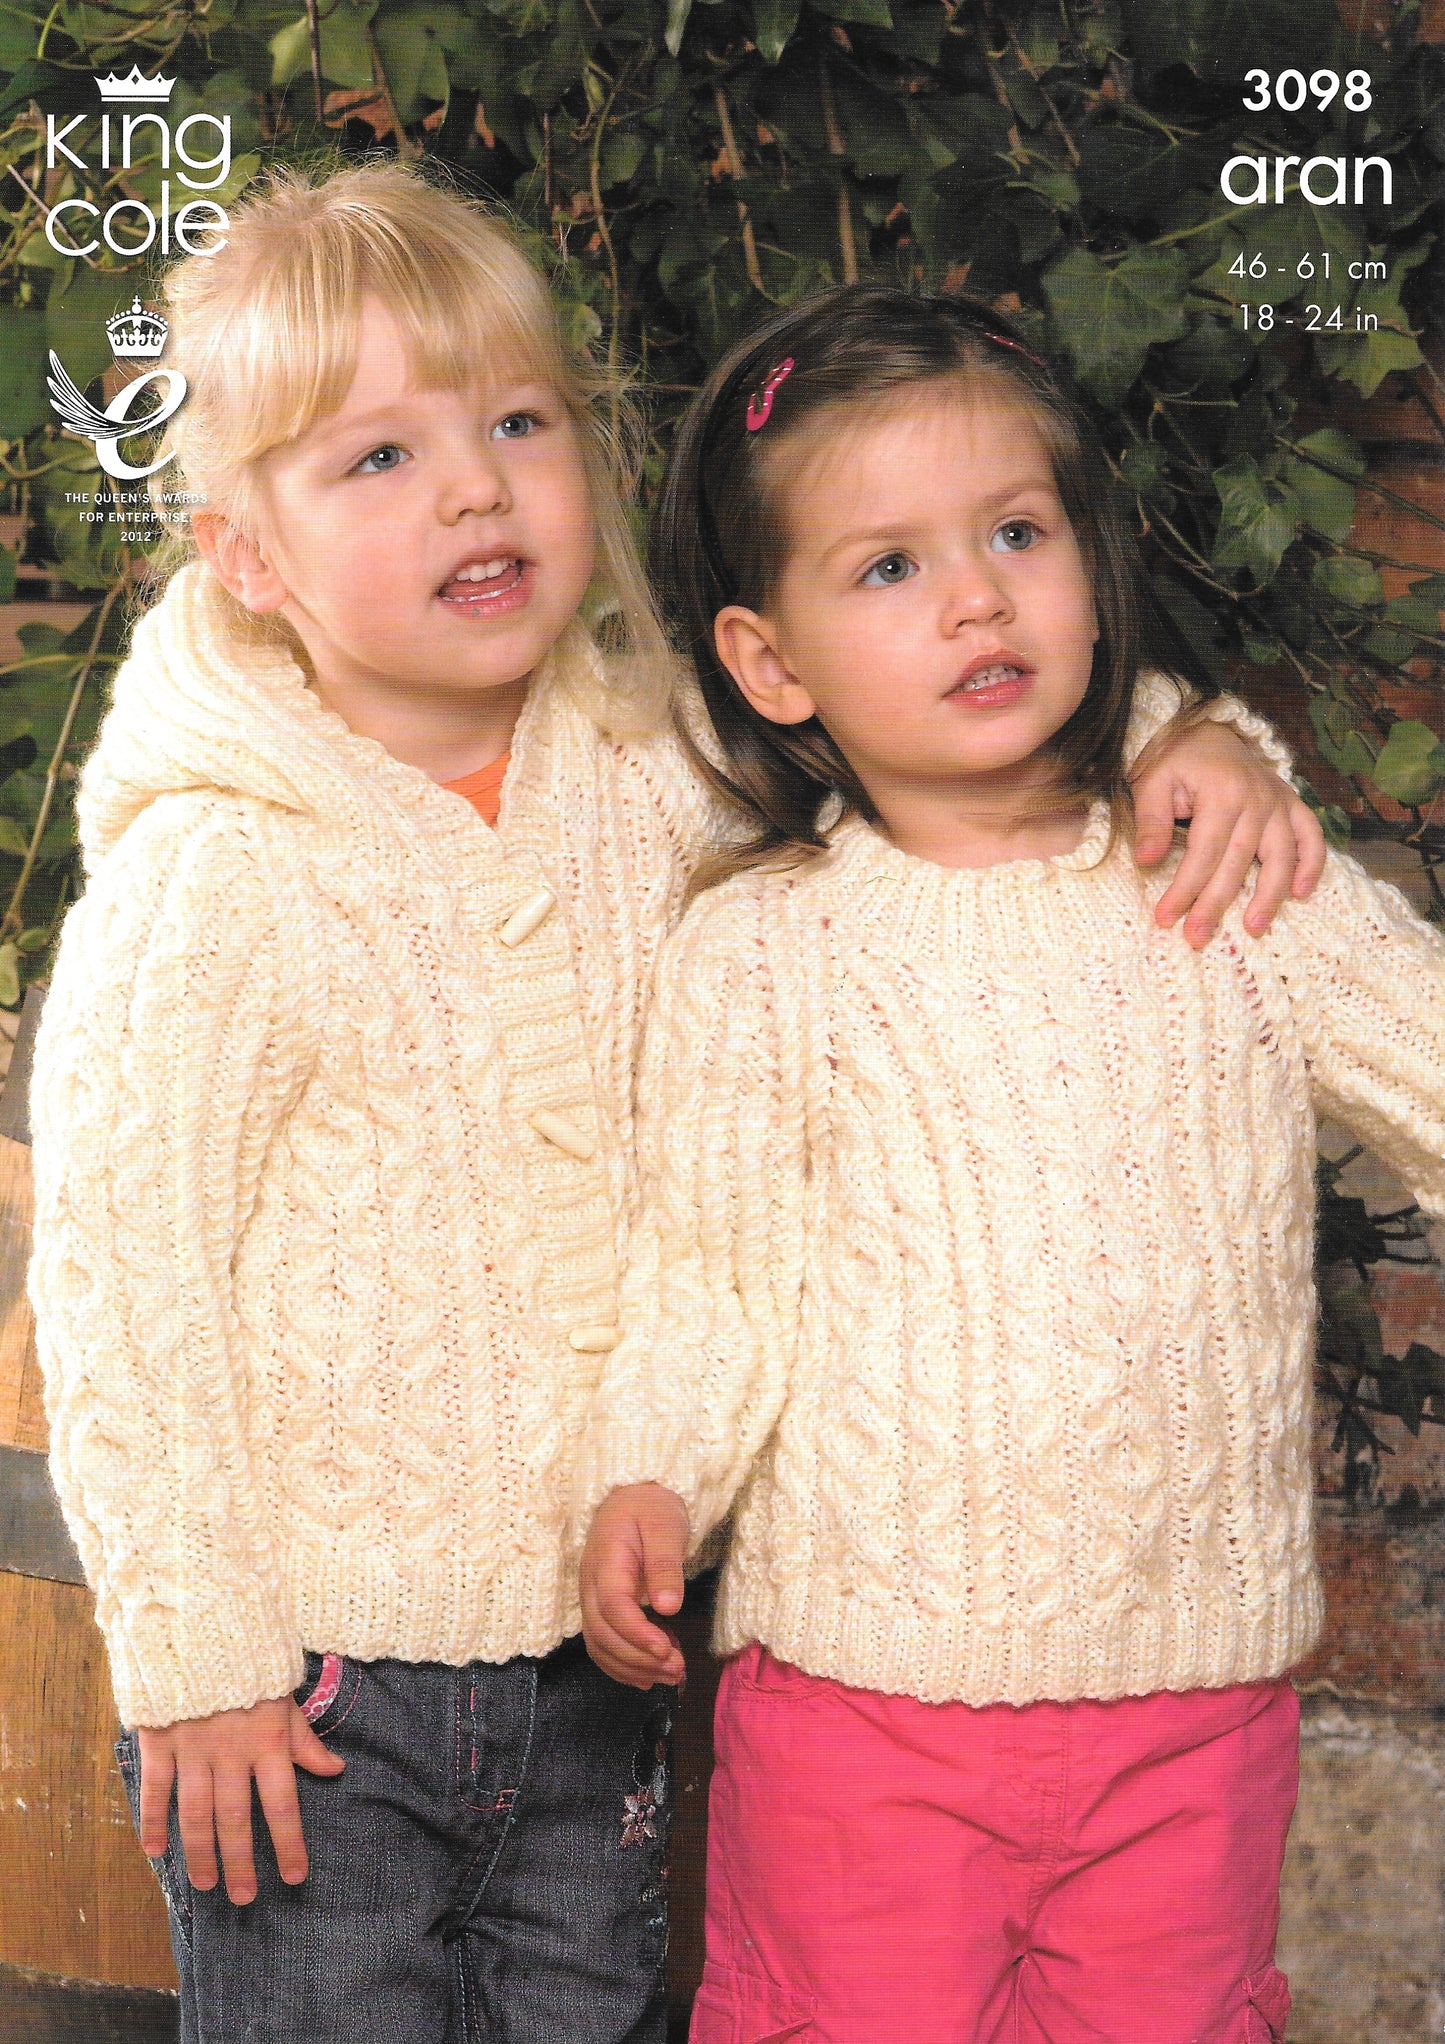 PRELOVED 3098 King Cole Knitting Pattern. Sweater/Hooded Jacket/Coat. Aran